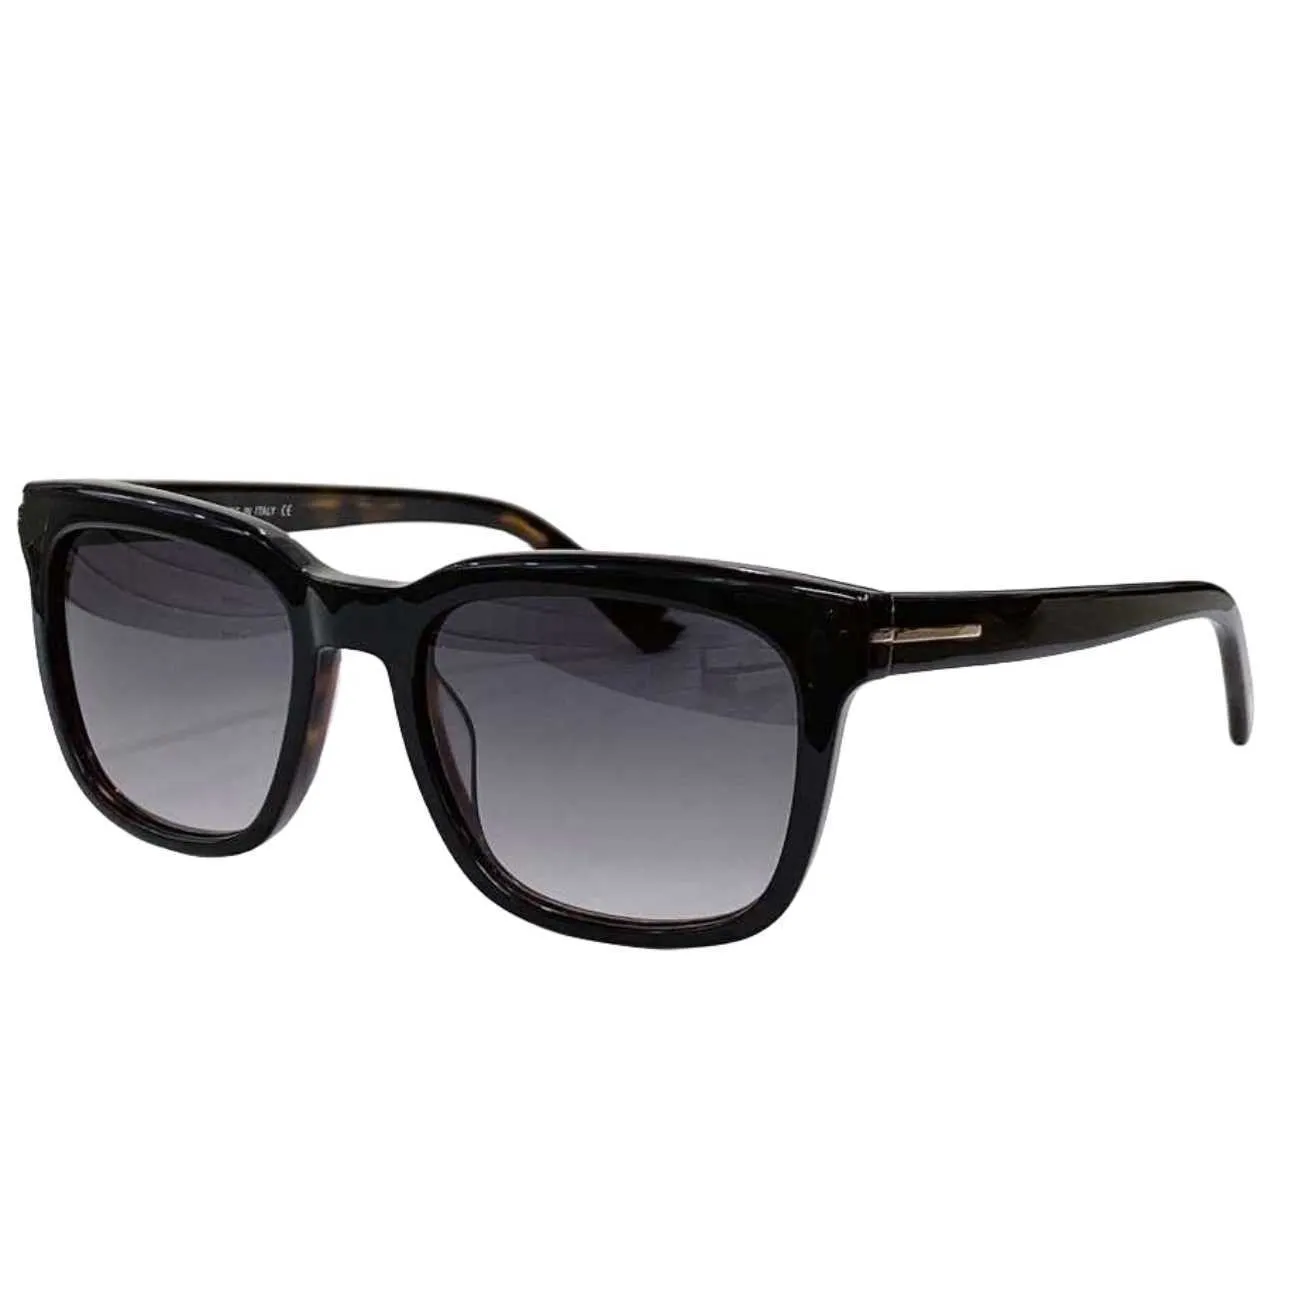 Sunglasses Celebrity James Sunglass Bond Sunglasses Fashion Men Women For Brand Designer Driving Sun Glasses Ladies Super Star Eyeglasses With Box FT Size